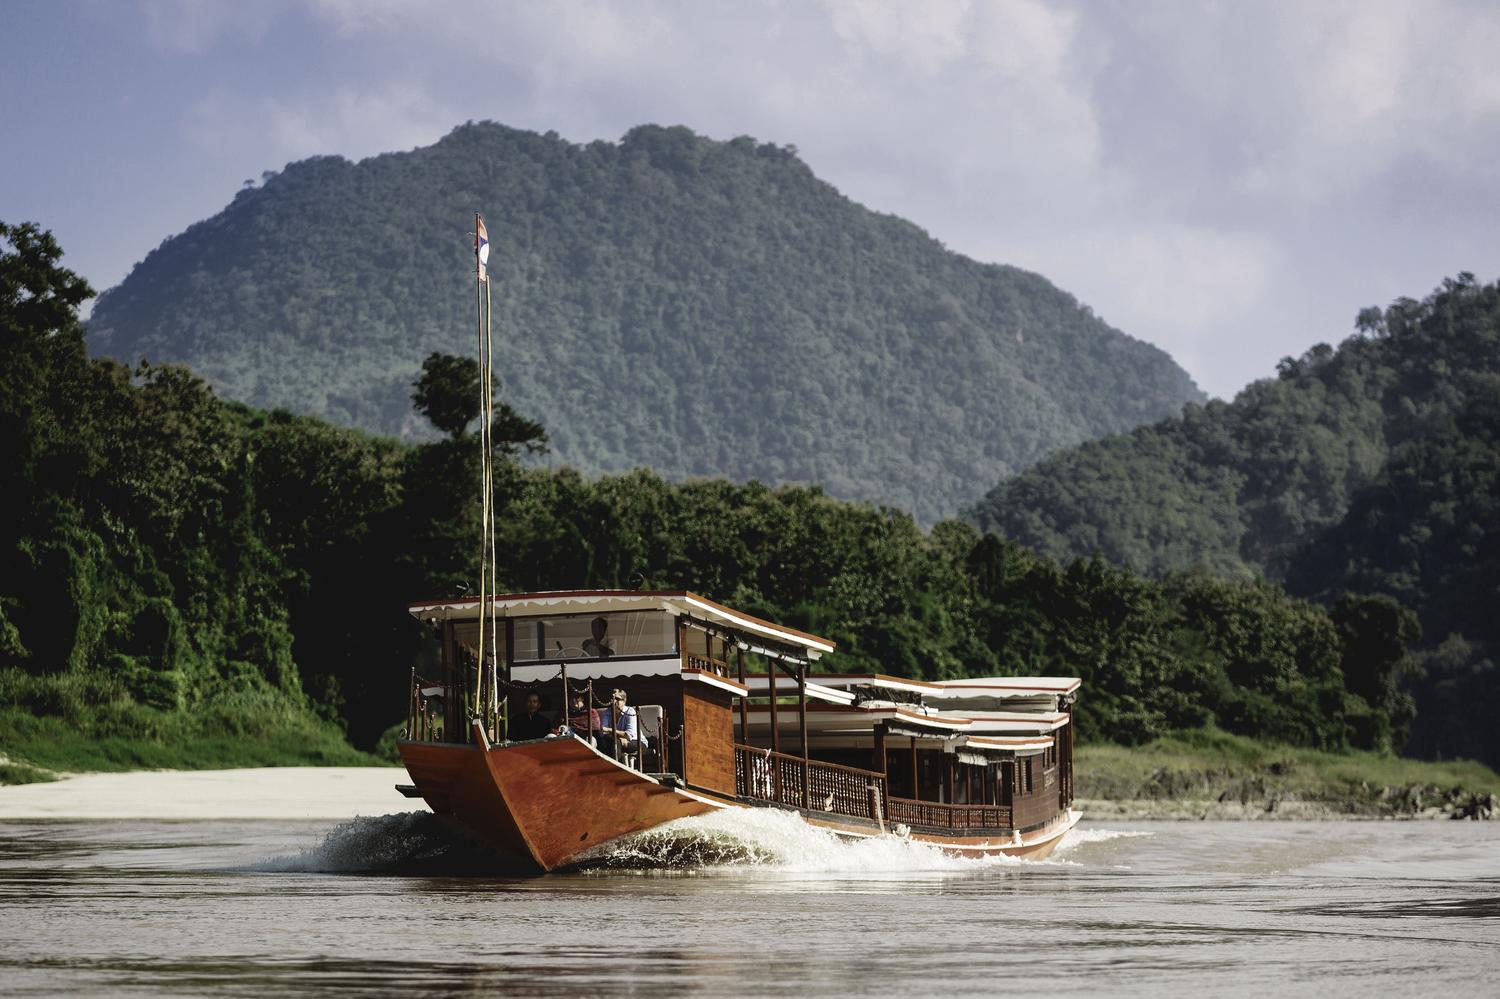 Laos to Thailand via The Mekong